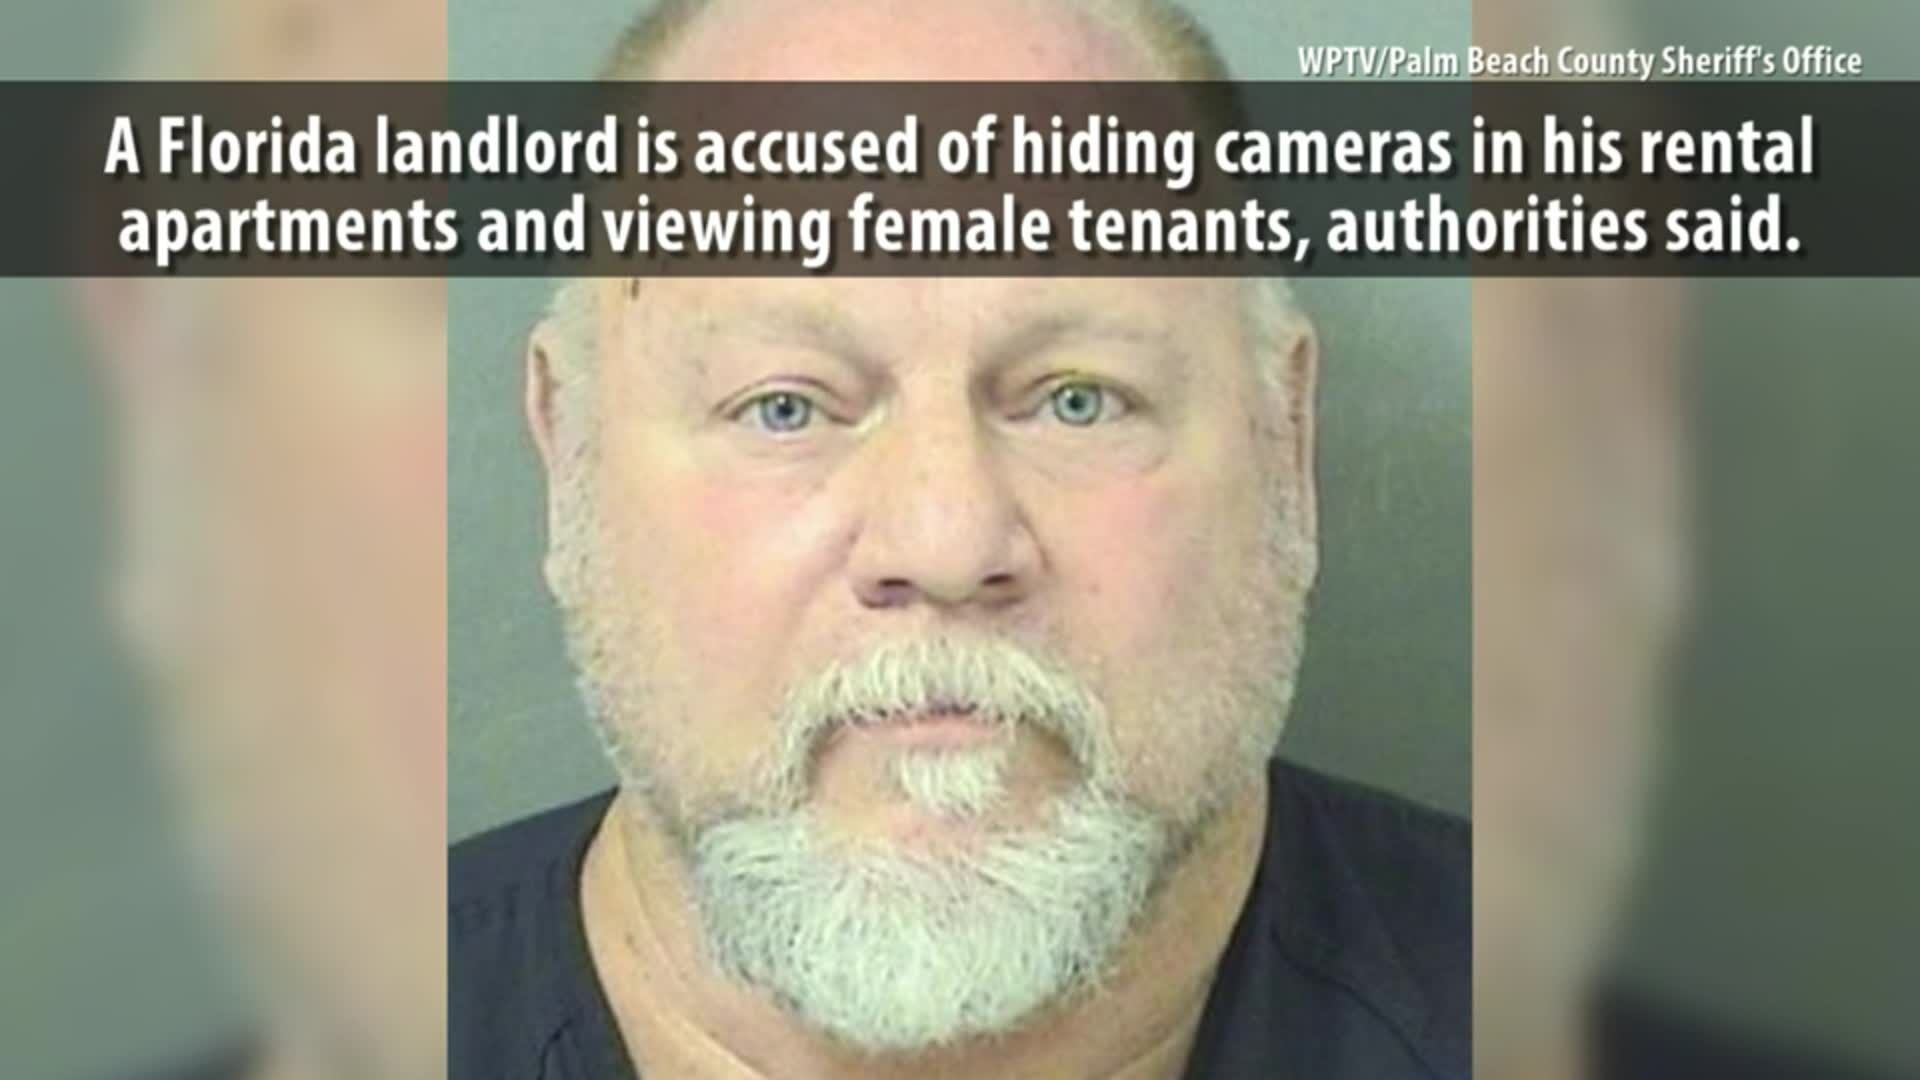 Florida landlord accused of video voyeurism of 4 women tenants Trending fox23 pic